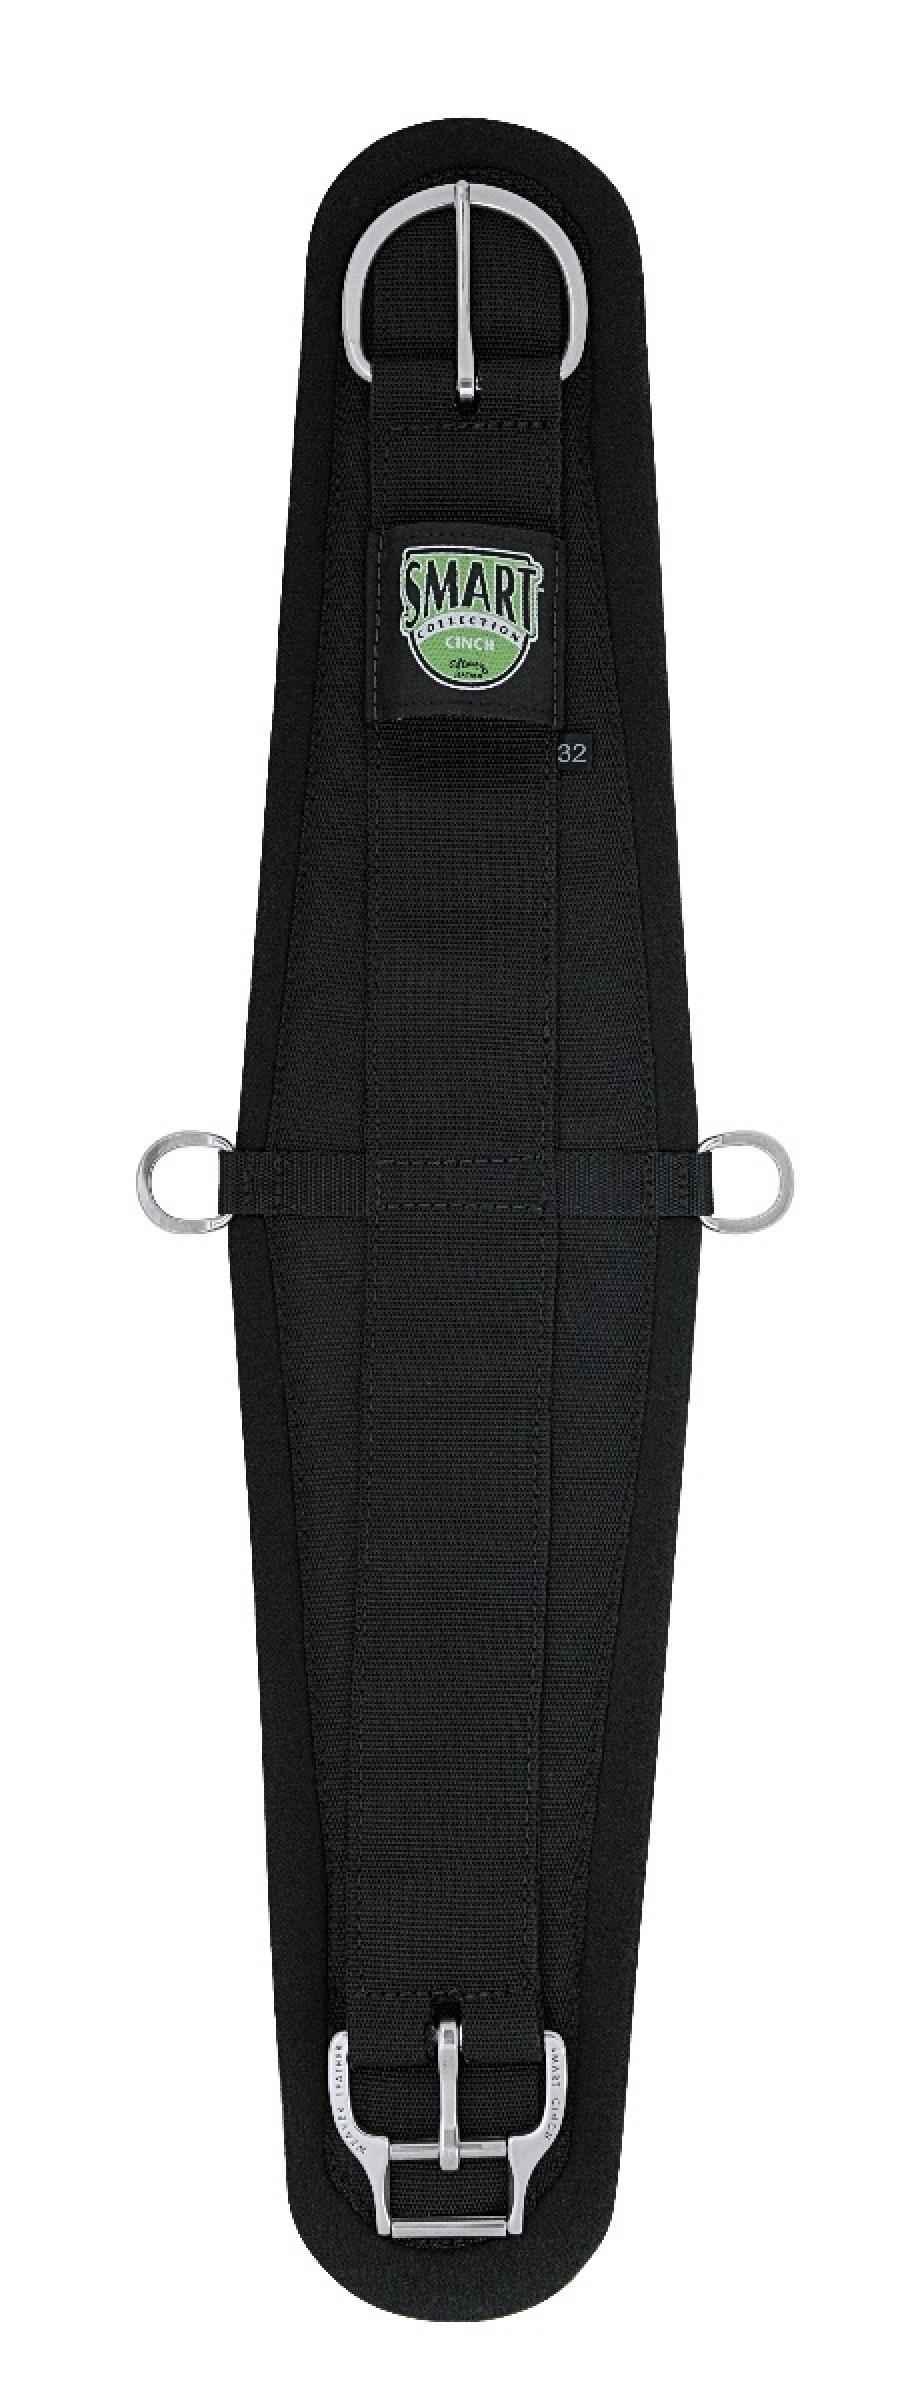 Weaver Leather Felt Lined Roper Smart Cinch® with Roll Snug® Cinch Buckle